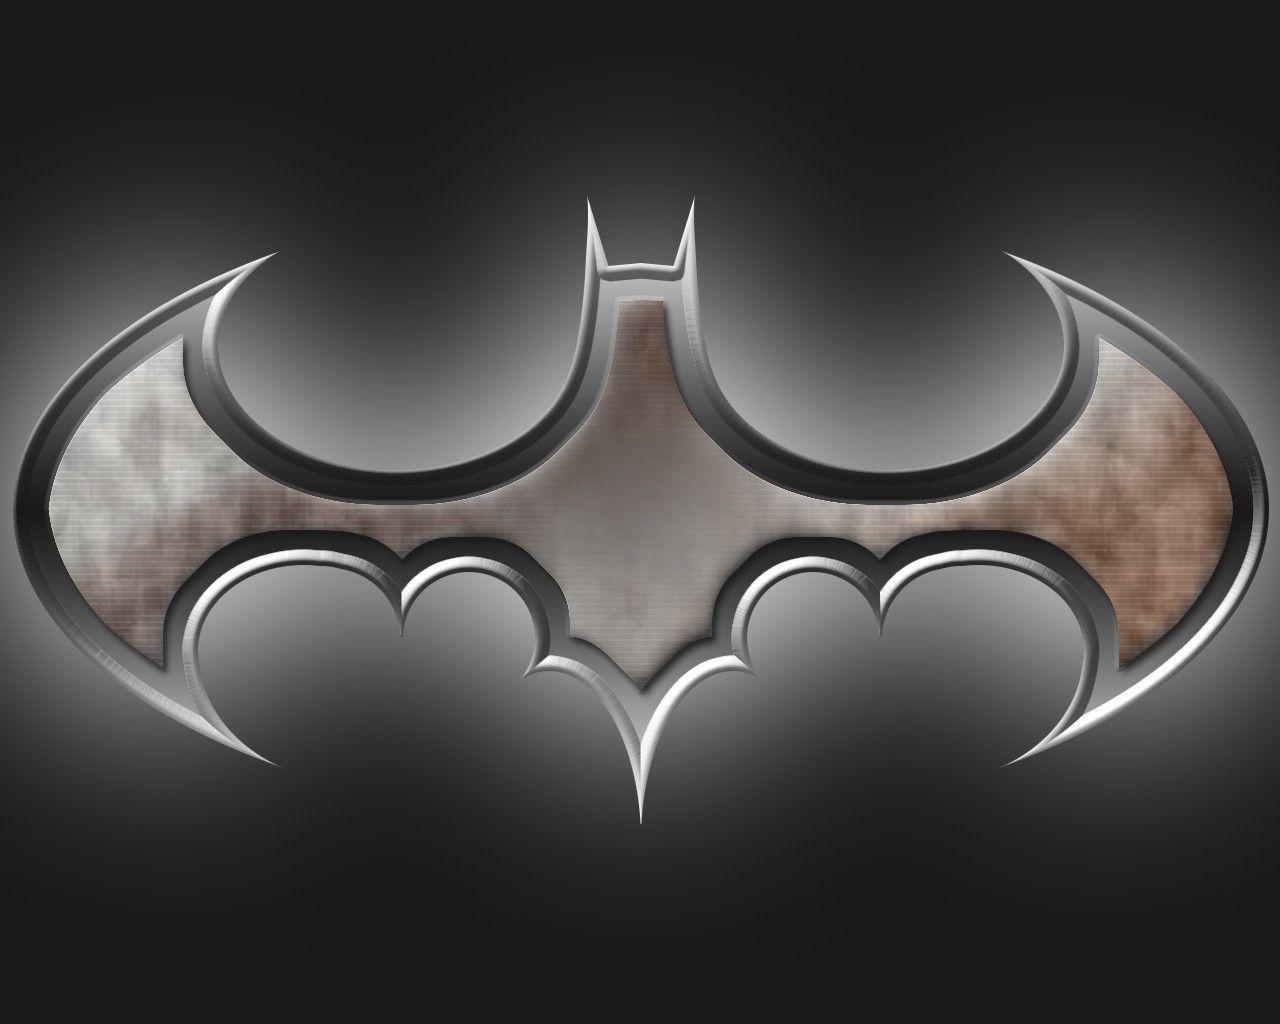 Batman wallpaper batman logos